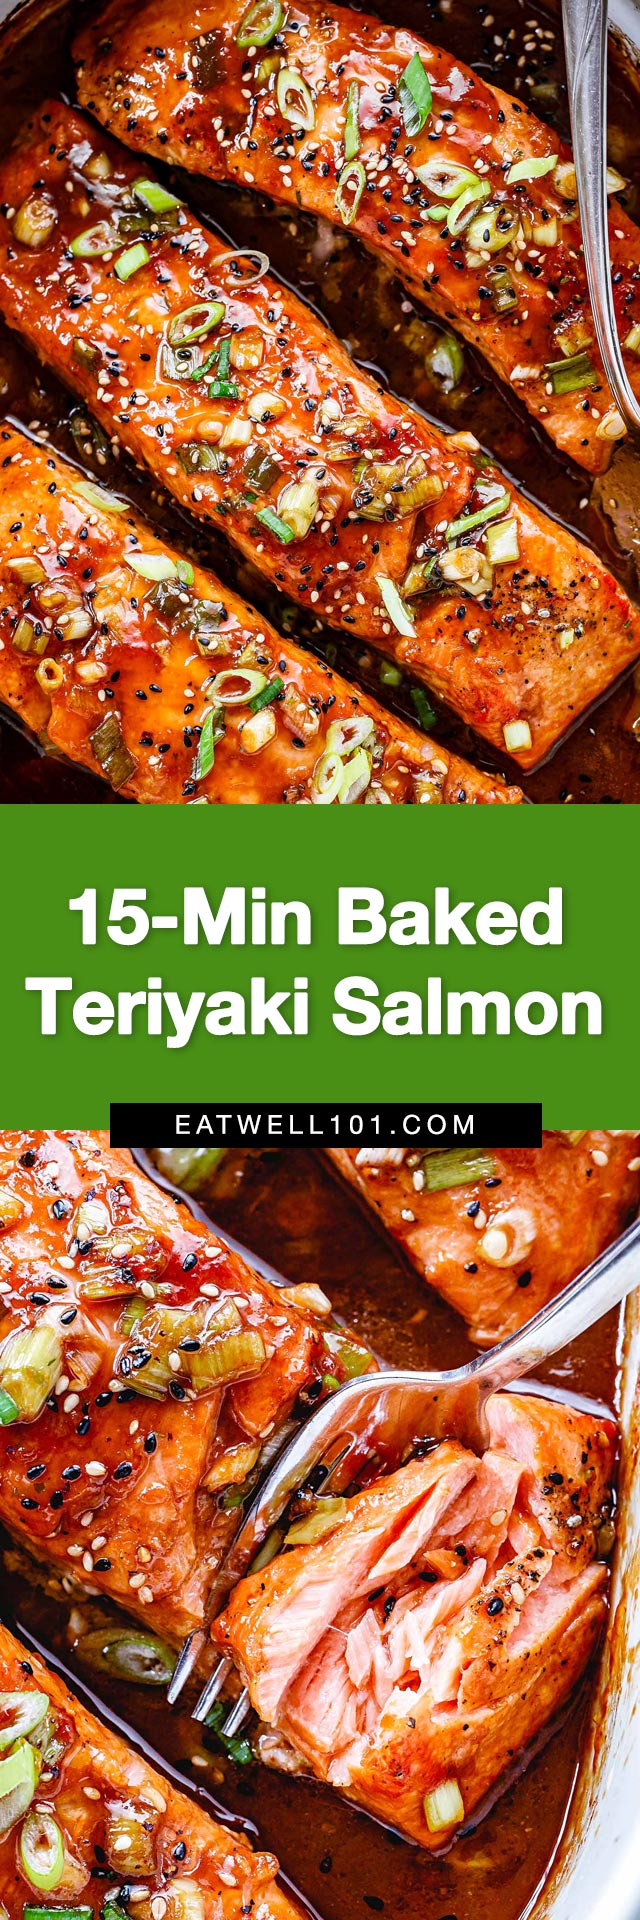 Baked Teriyaki salmon - #teriyaki #salmon #recipe #eatwell101 - The ultimate healthy, low carb salmon recipe ready in minutes! Baked salmon is crispy on the outside and full of wonderful, savory-sweet Teriyaki flavor!